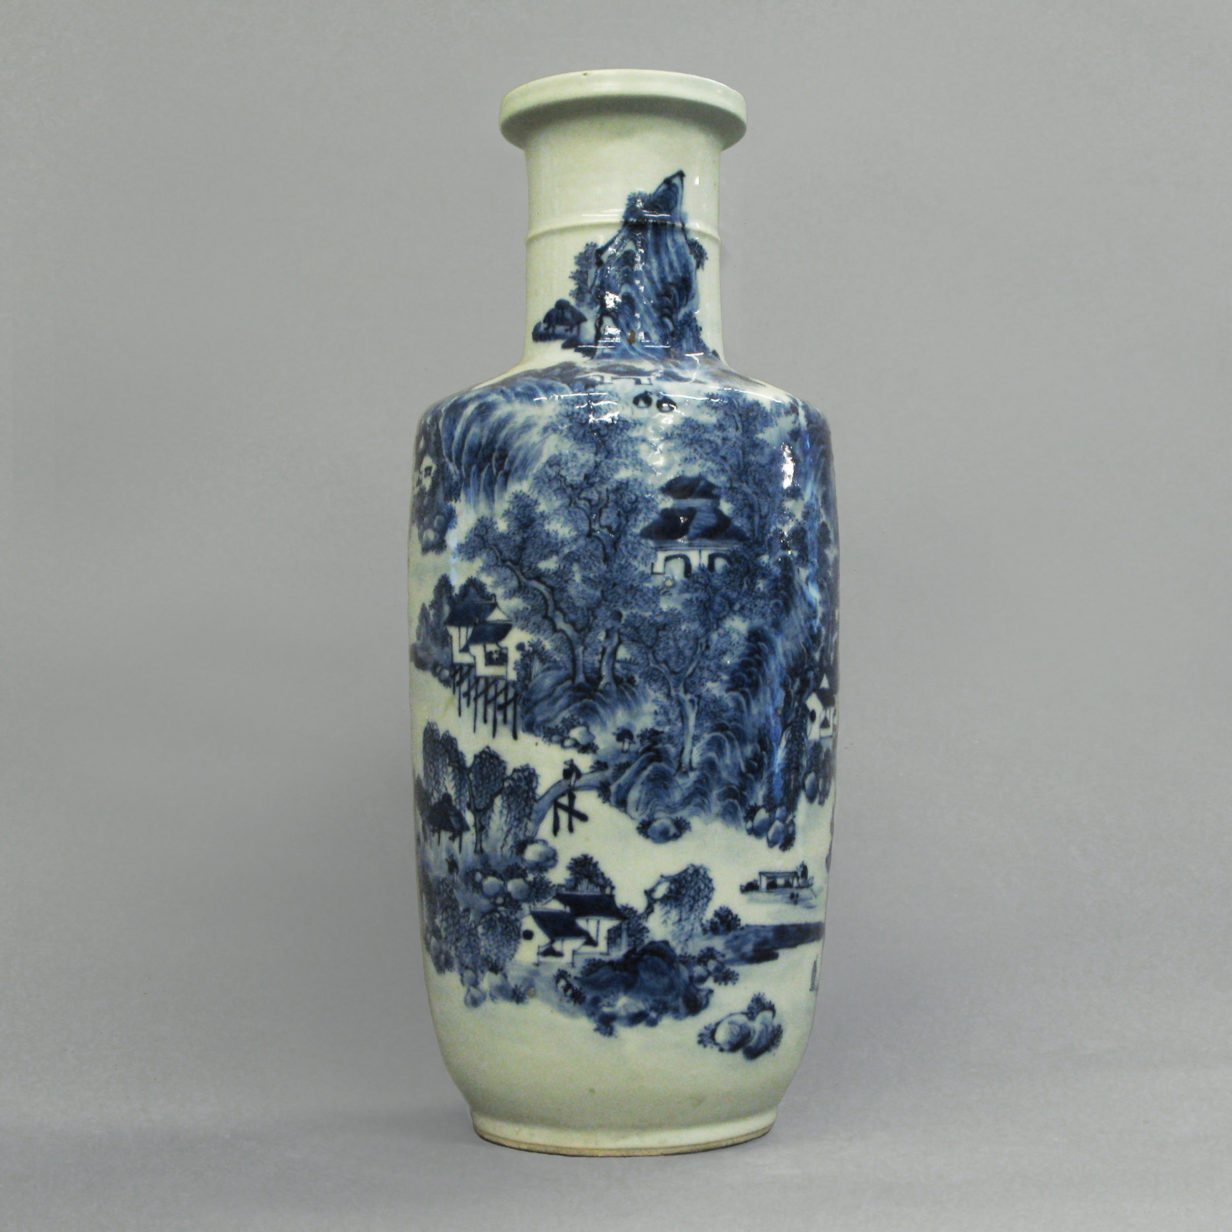 A blue and white porcelain vase